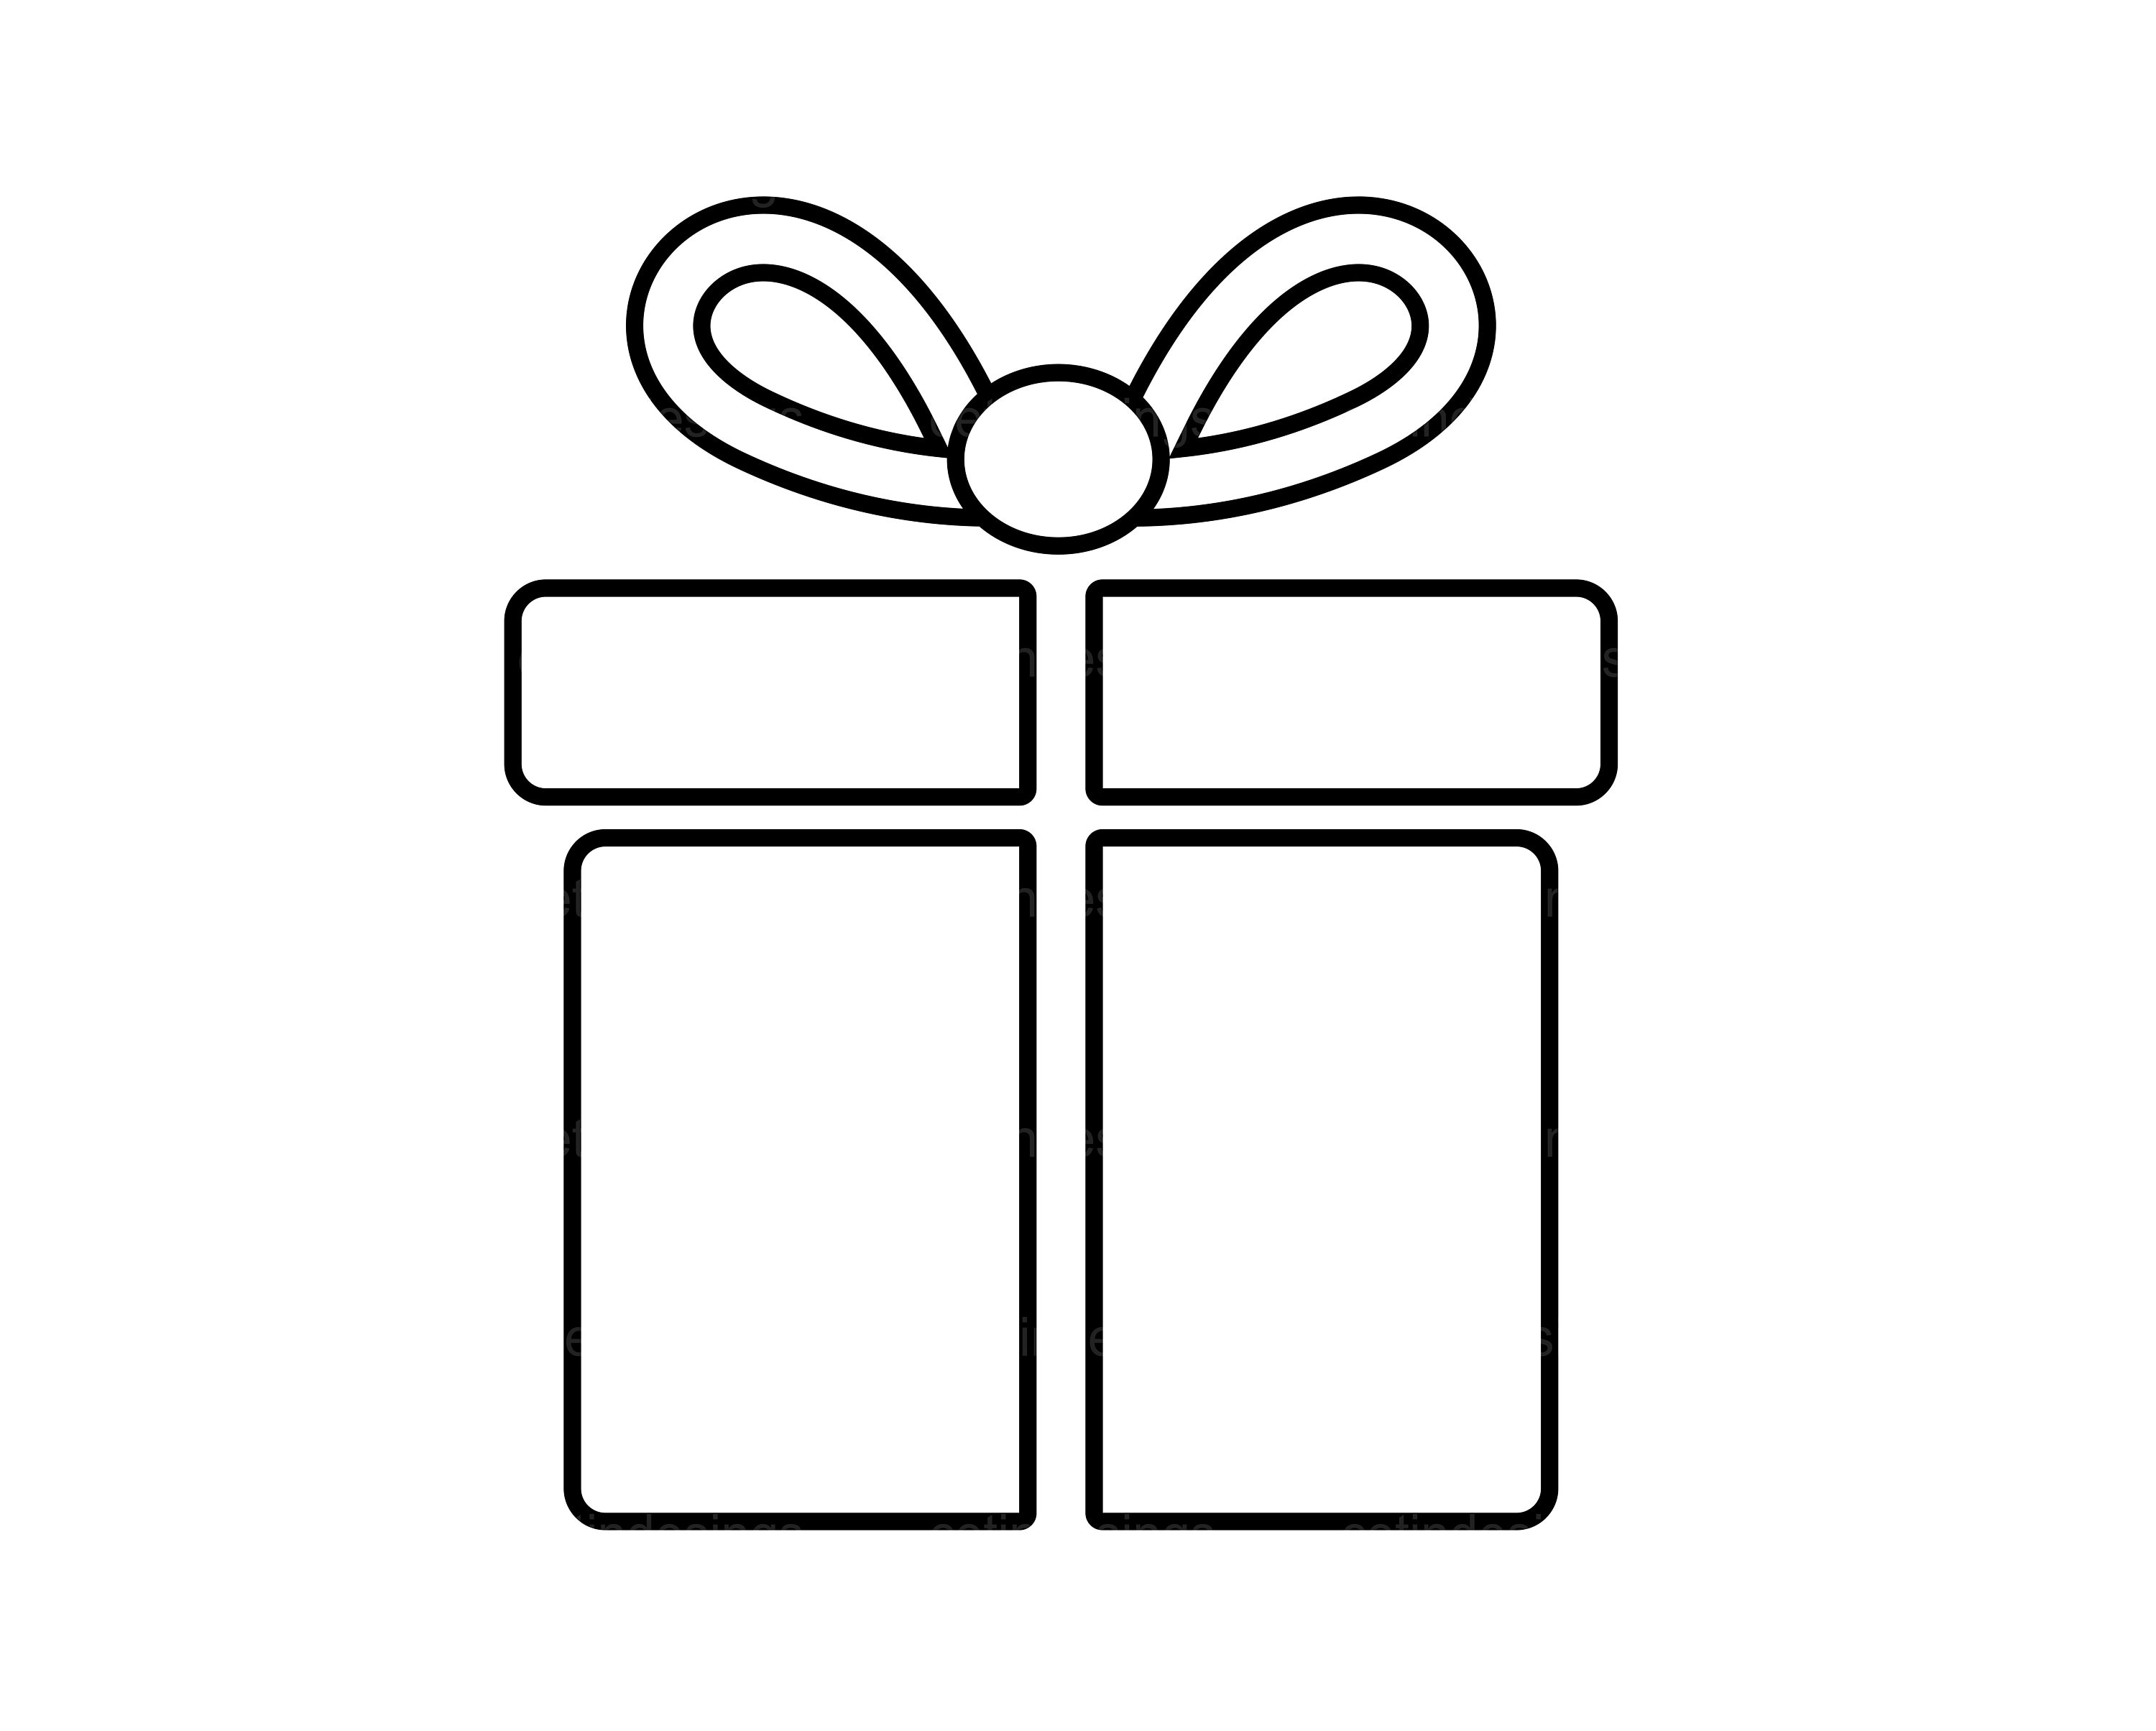 Gift box outline, present for Christmas, birthday or holiday